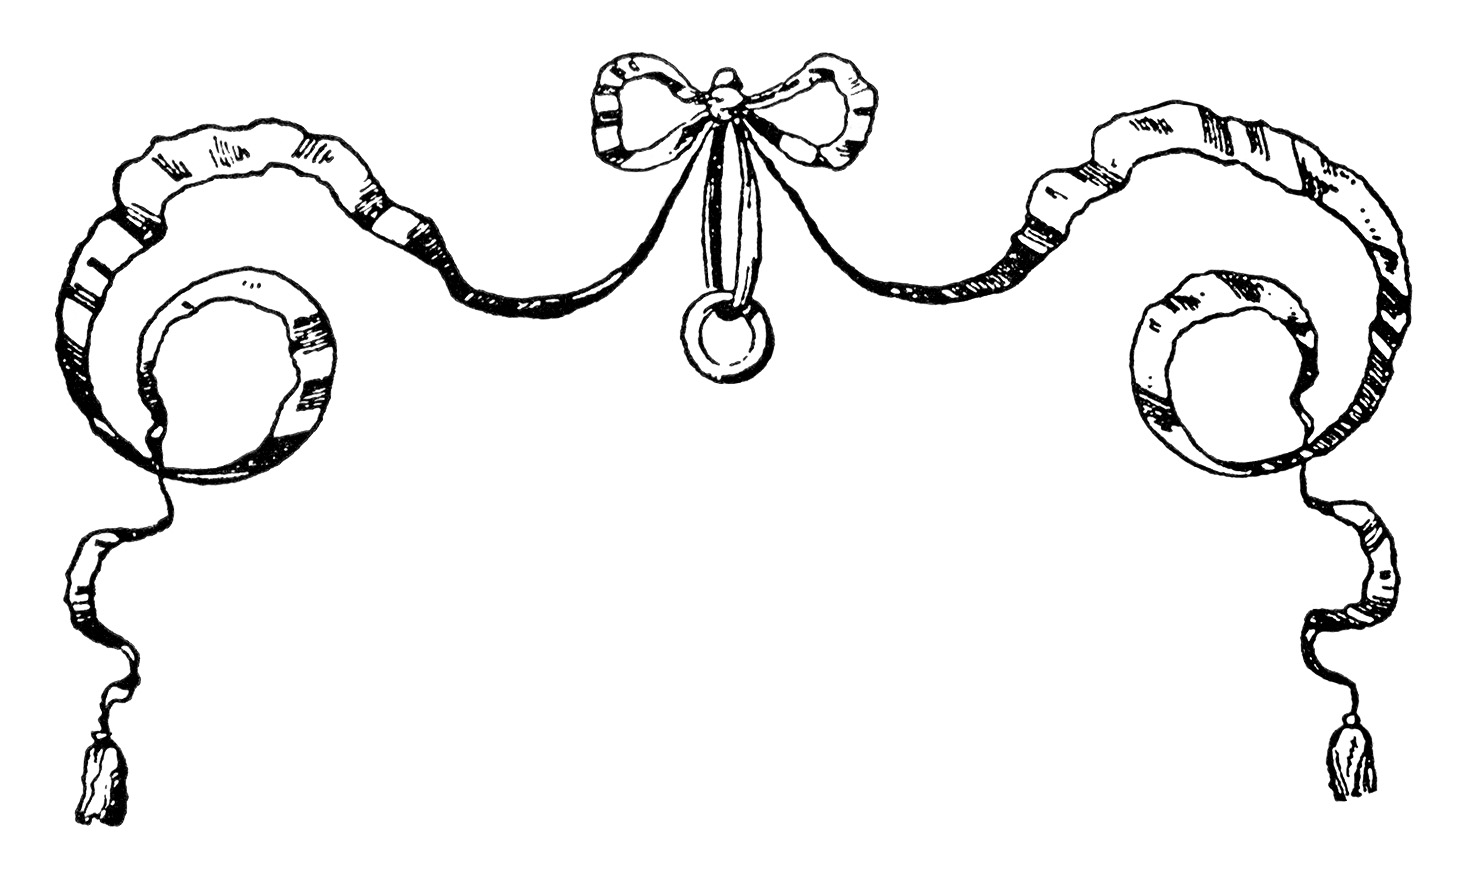 Vintage Ribbons and Bows ~ Free Clip Art | Old Design Shop Blog